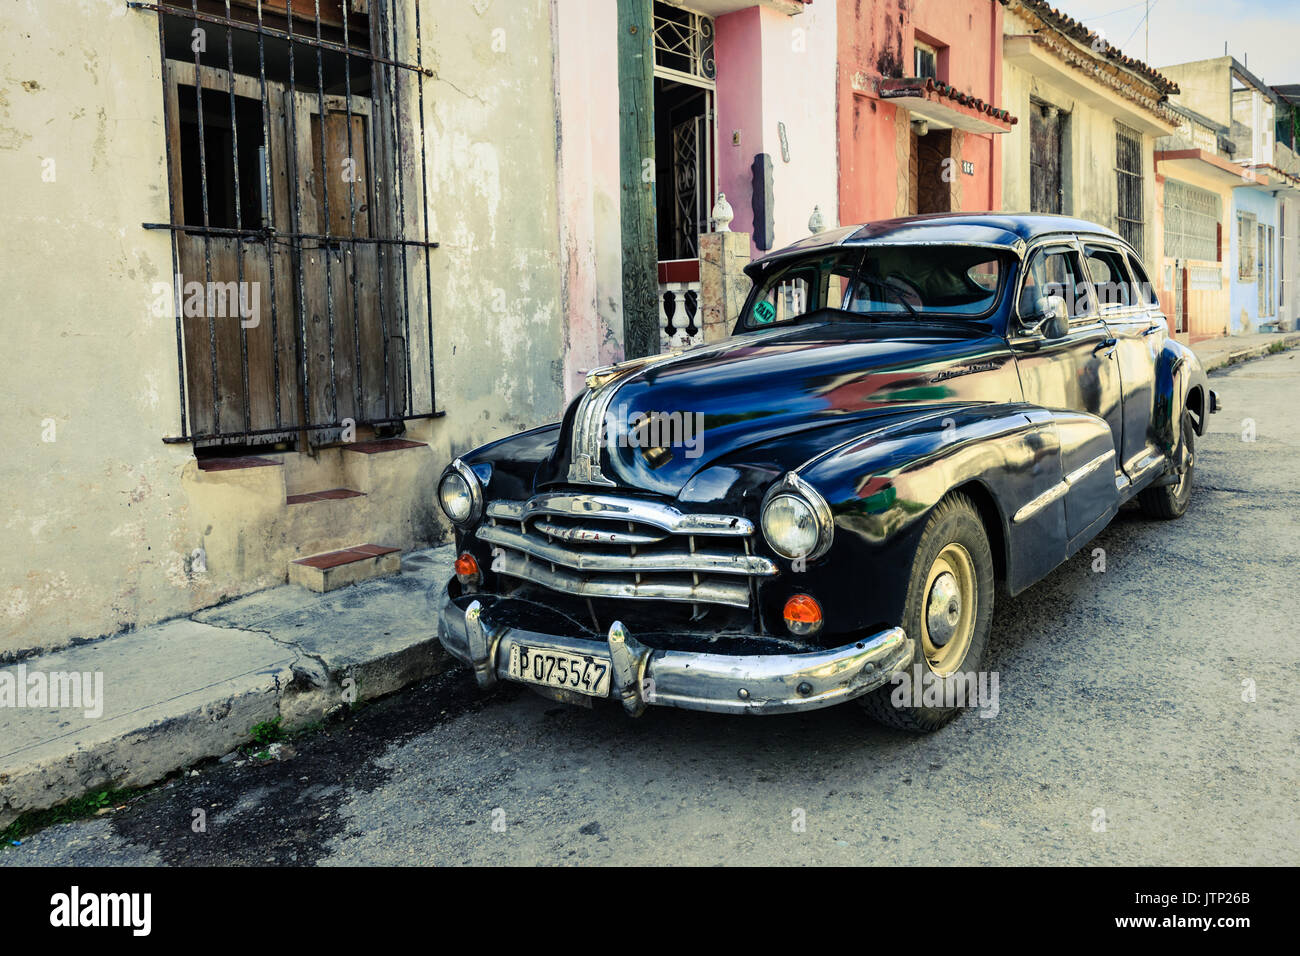 Black Pontiac Silver Streak vintage American classic car parked in street  scene, Habana, Havana, Cuba Stock Photo - Alamy